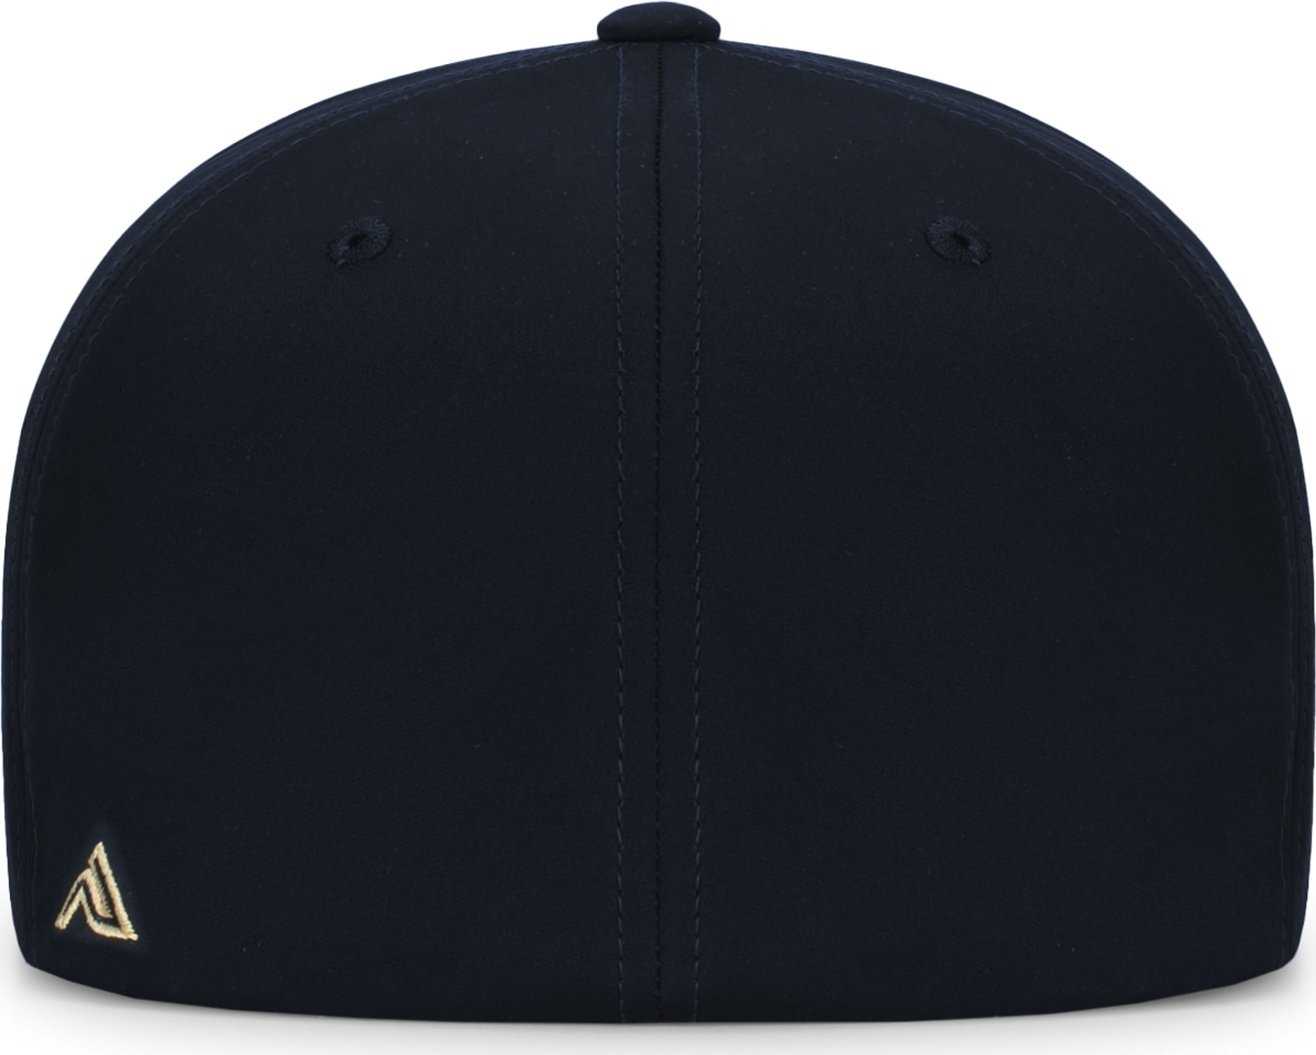 Pacific Headwear ES471 Premium Lightweight Perforated Pacflex Coolcore Cap - Vegas Black Black - HIT a Double - 1